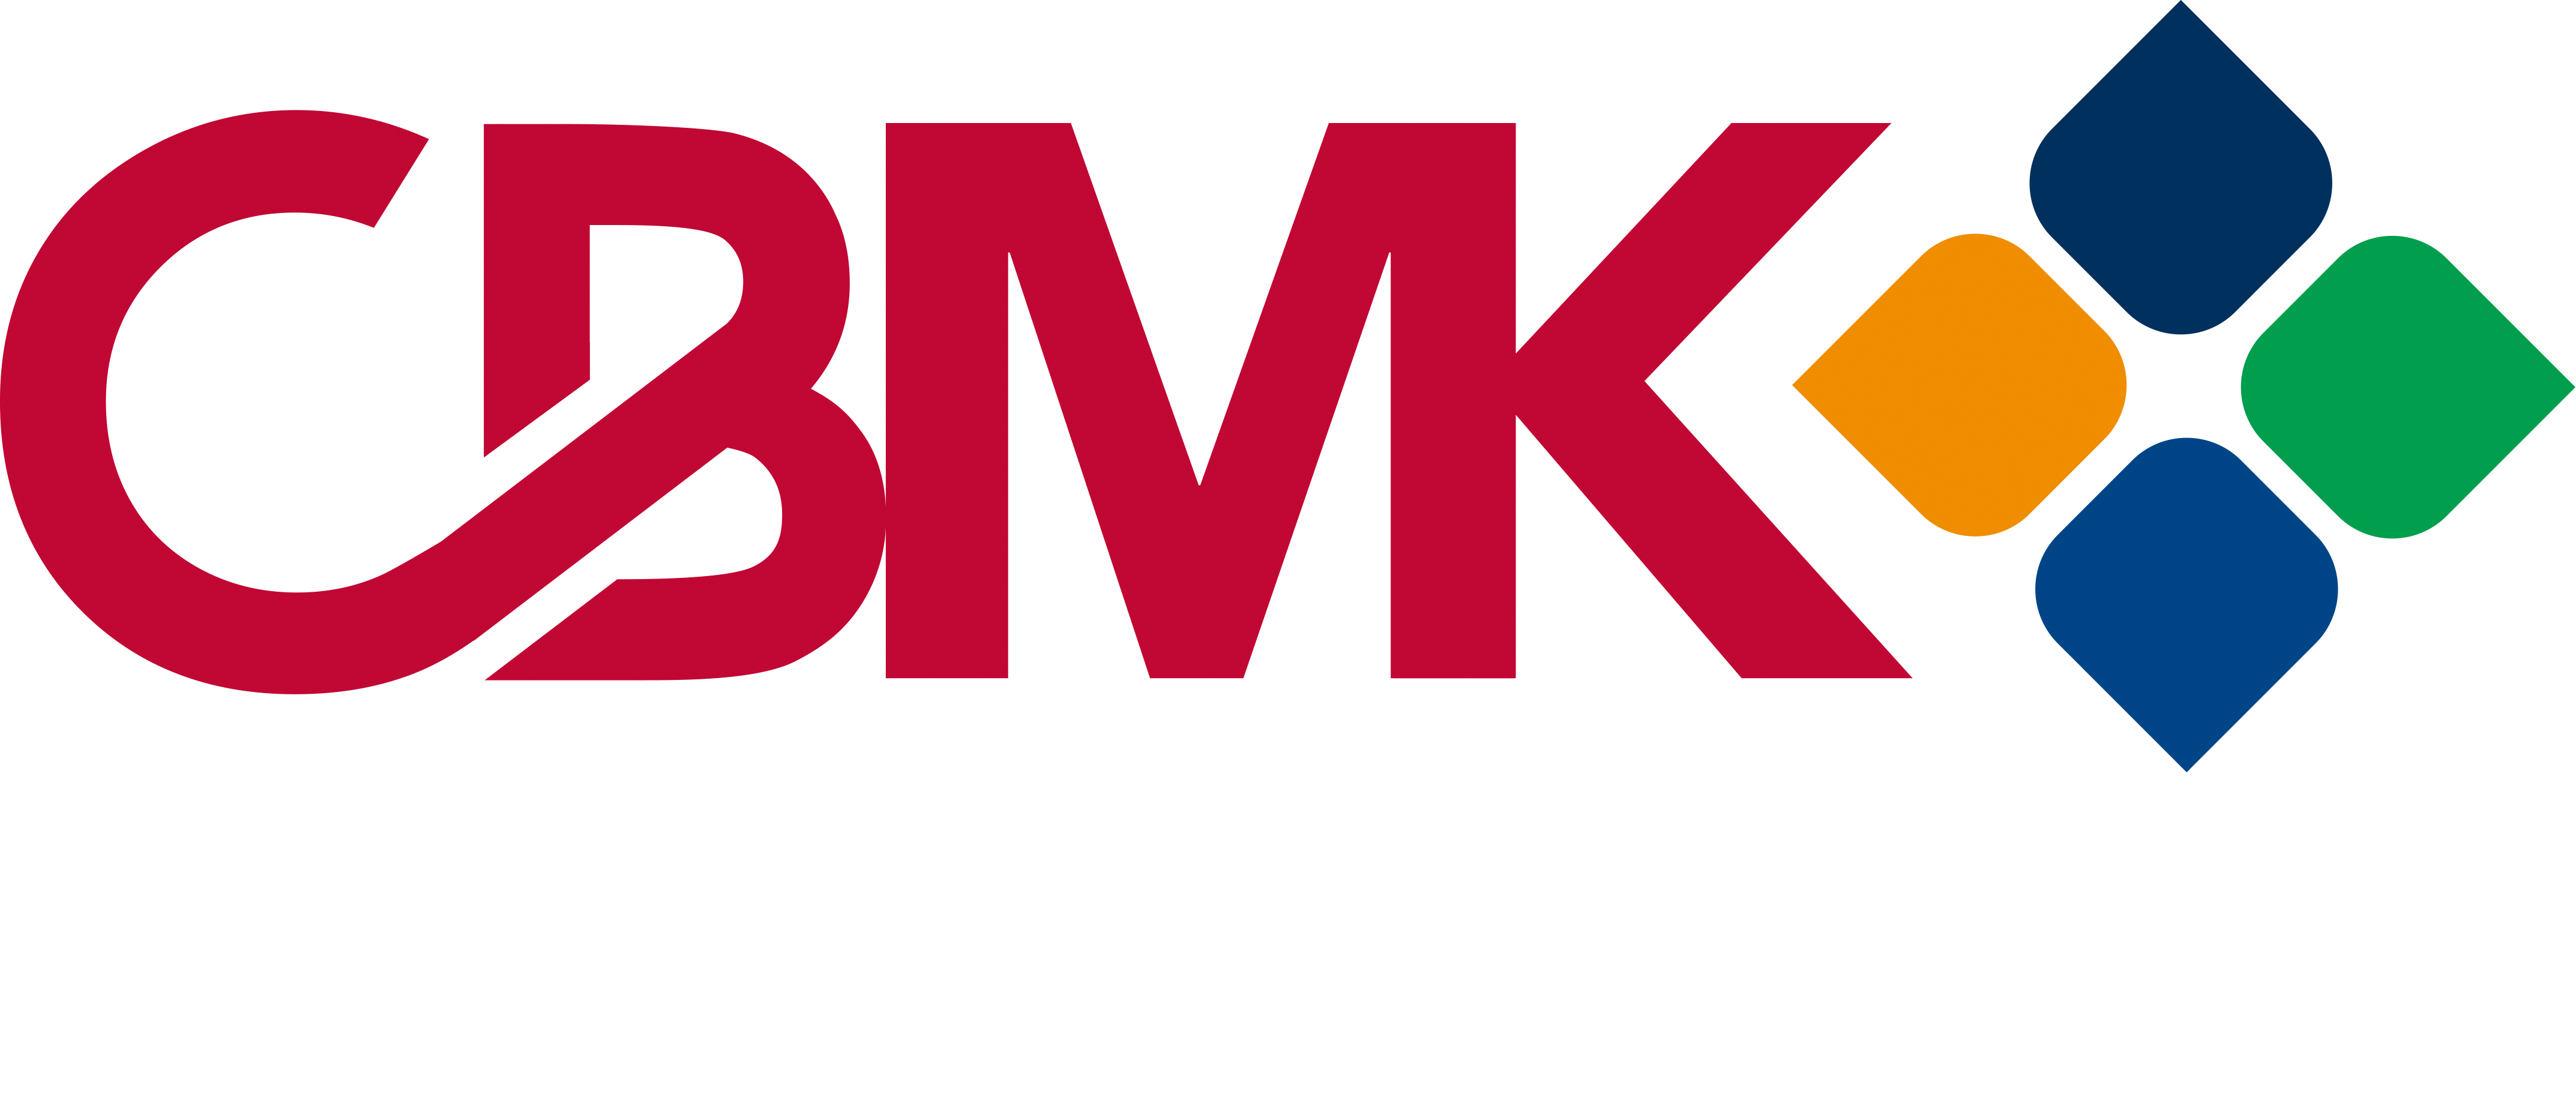 CBMK credit management